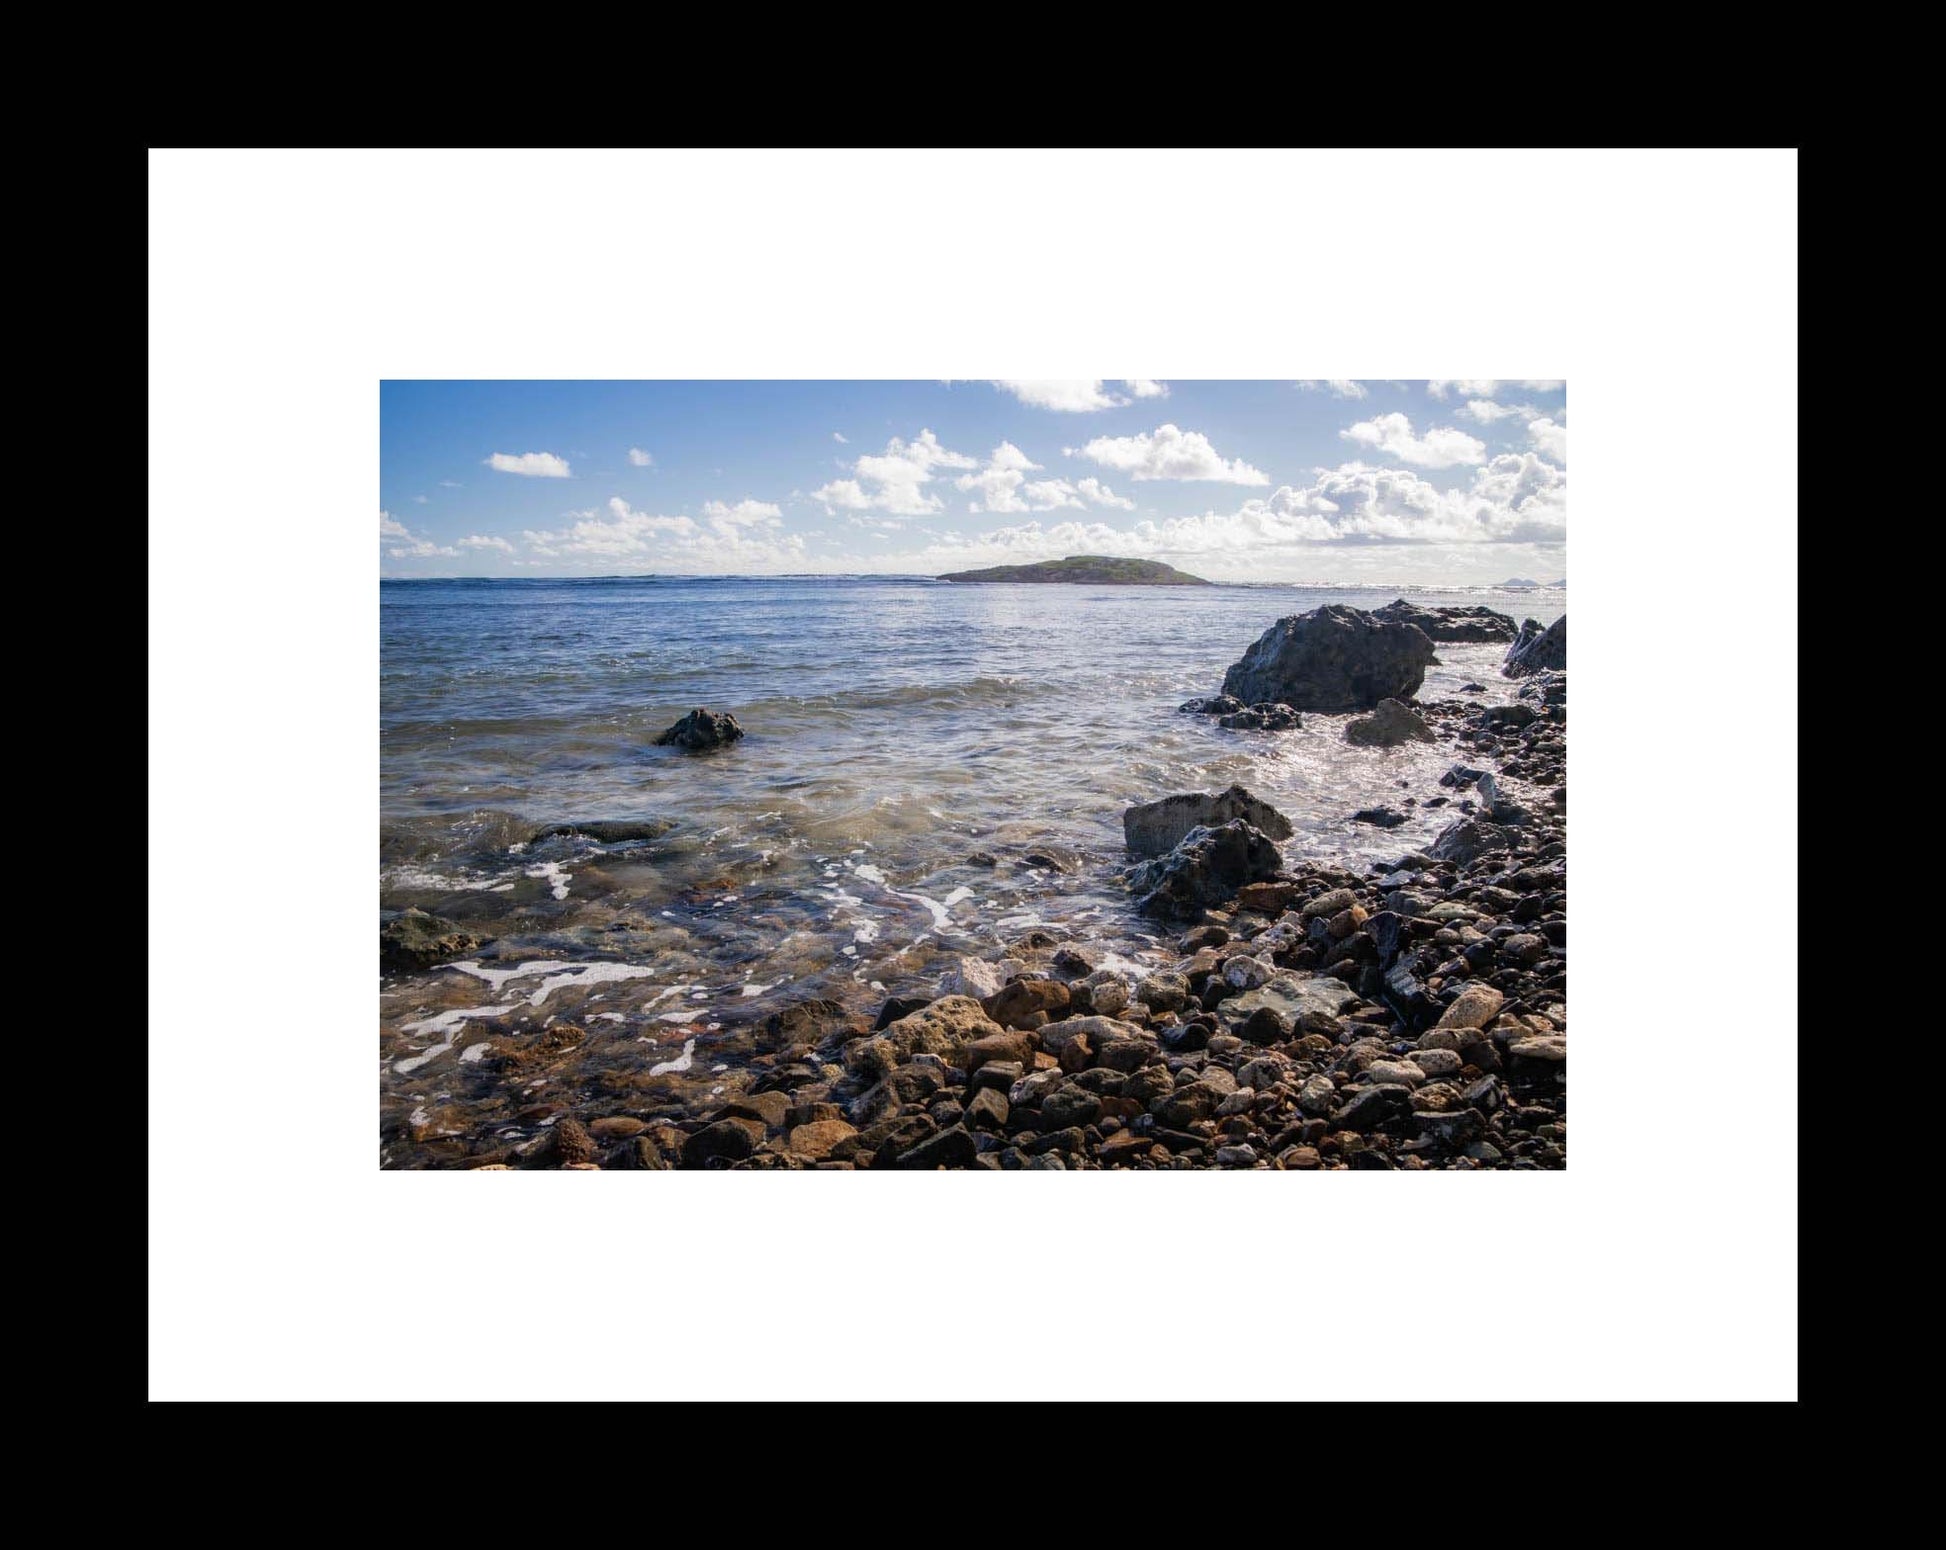 St Martin St Maarten Photography Print, Caribbean Beach Landscape, Baie Lucas, Rotary Lookout Point, Travel Wall Art - eireanneilis